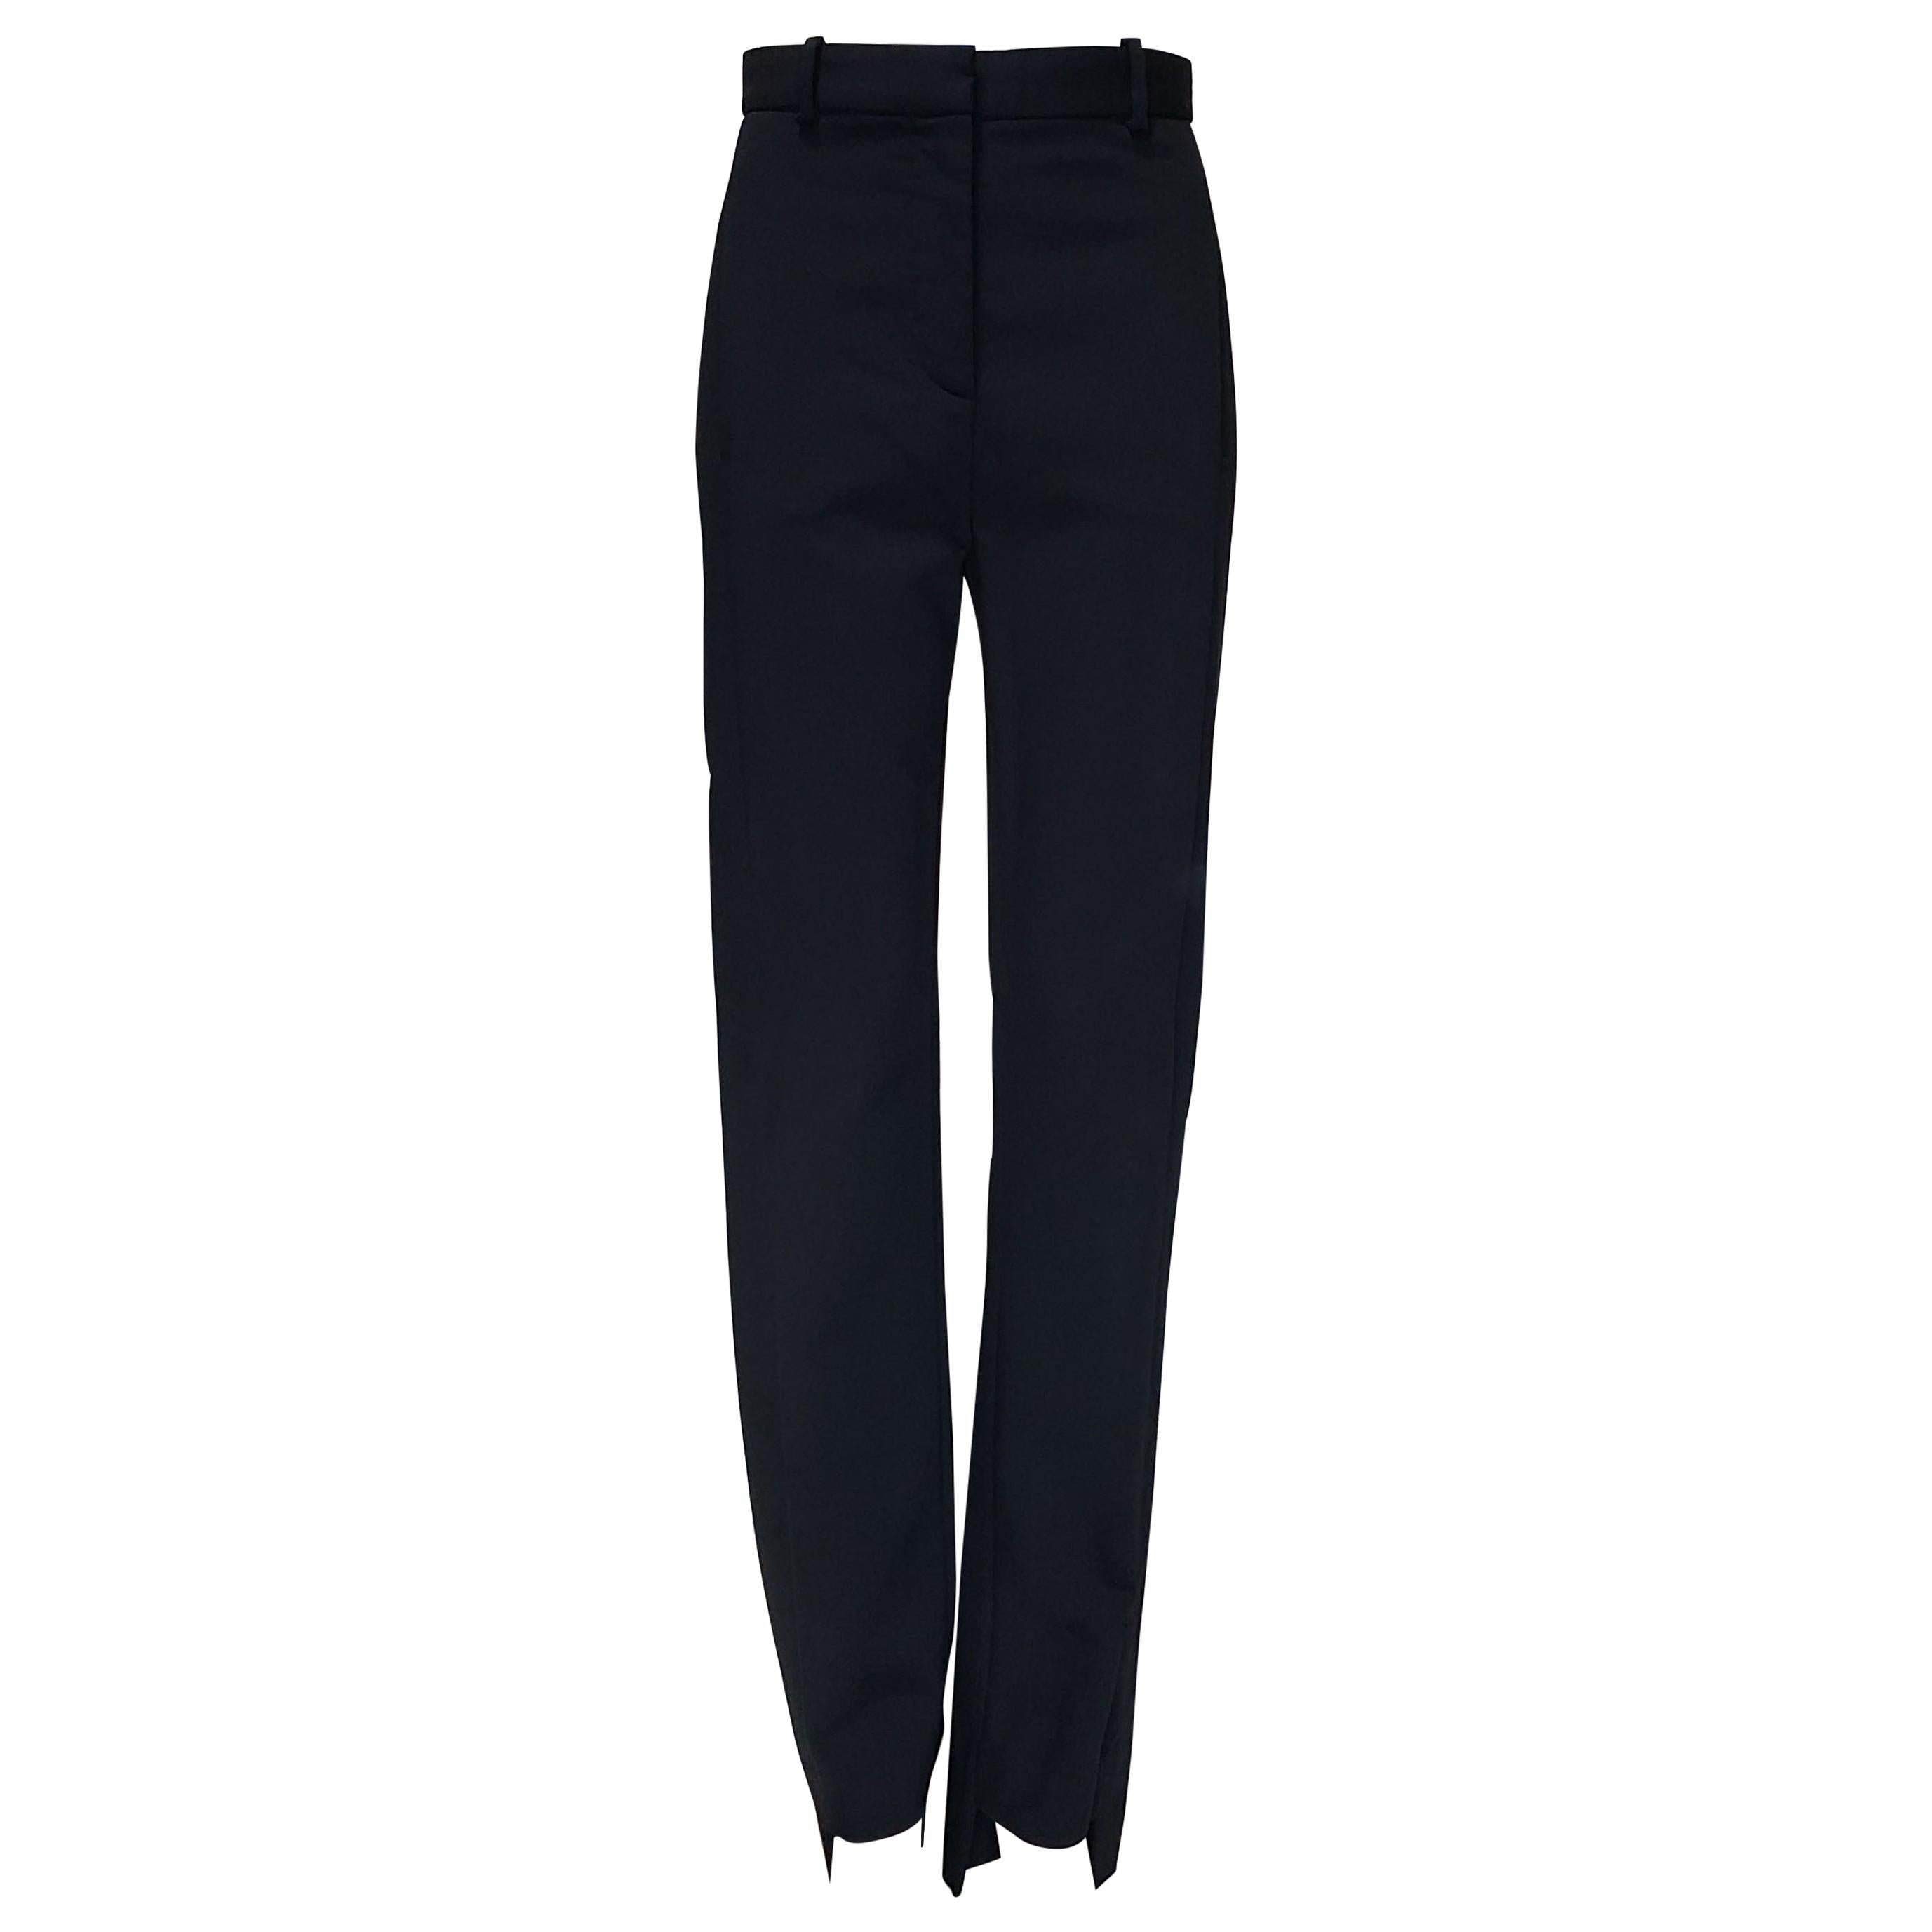 WOMEN FASHION Trousers Print discount 91% Zara Chino trouser Black/White 38                  EU 